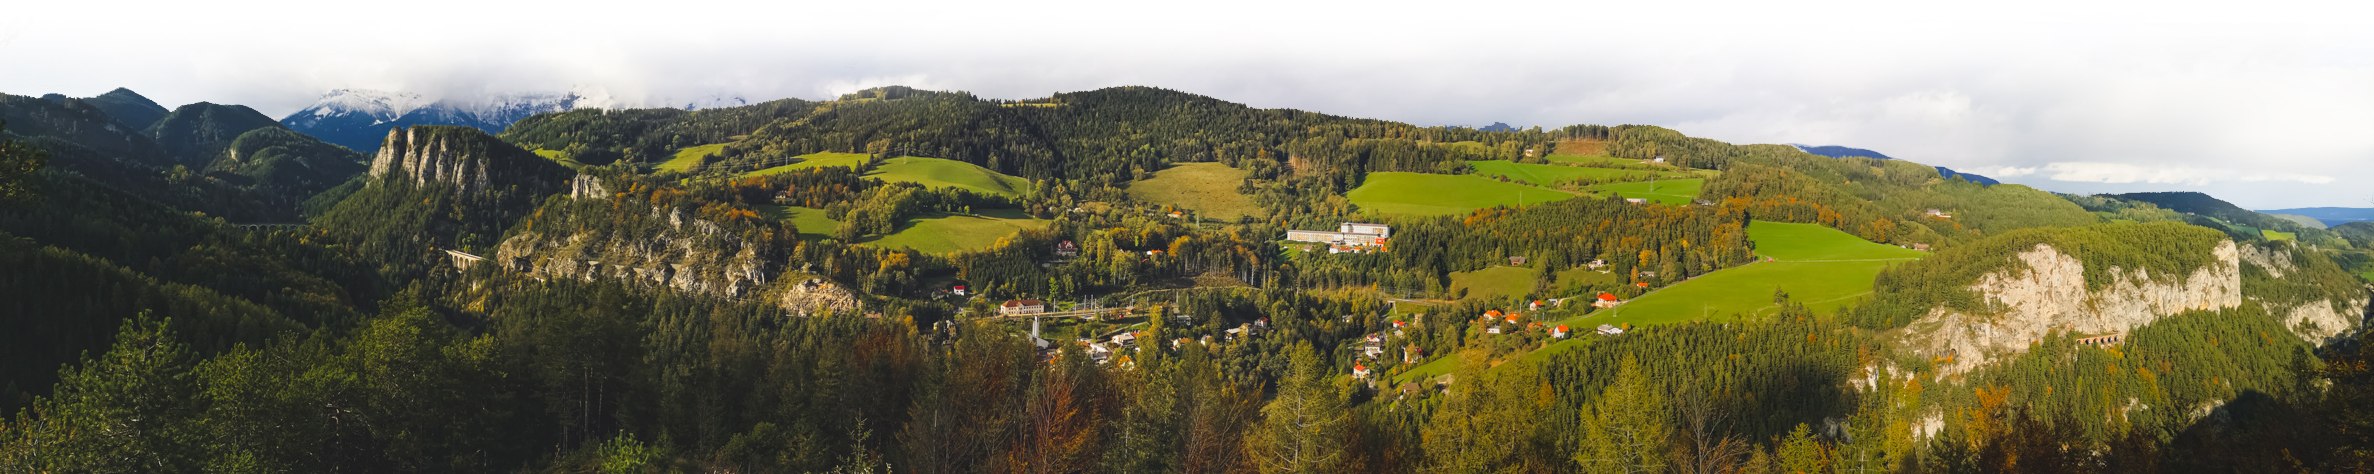 20 Schilling Blick panorama Semmering railway in Austria